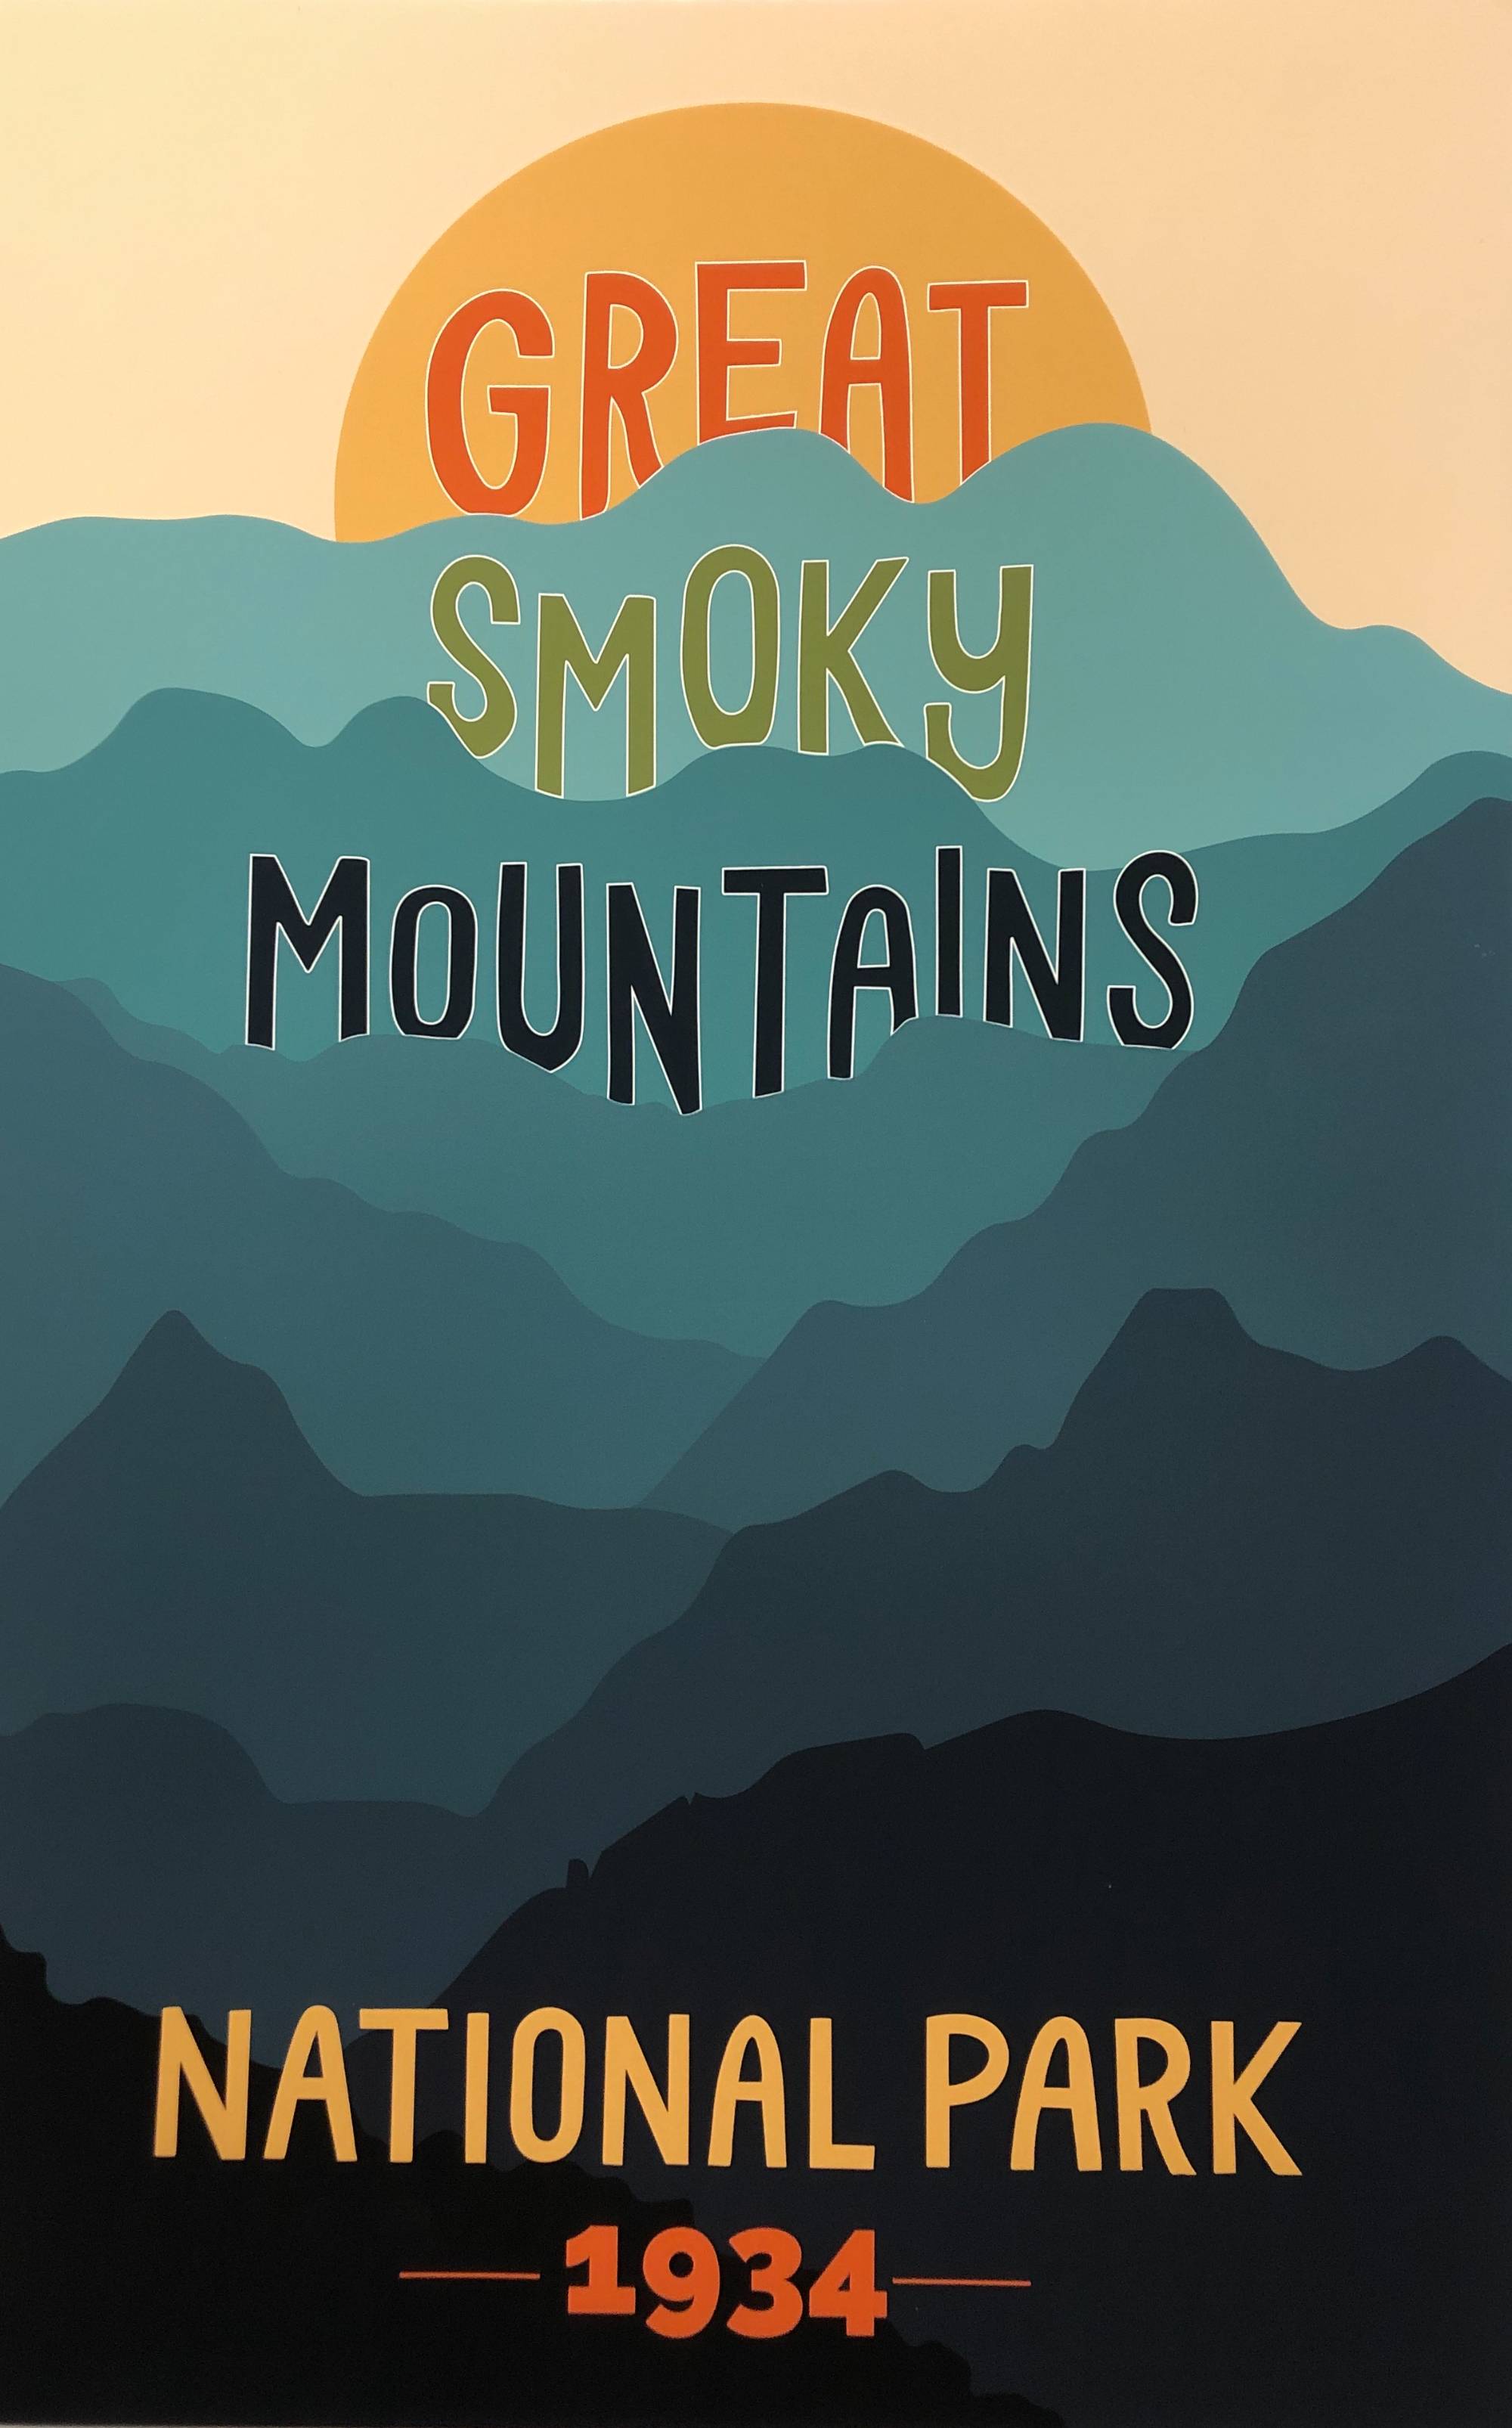 digital illustration of mountains